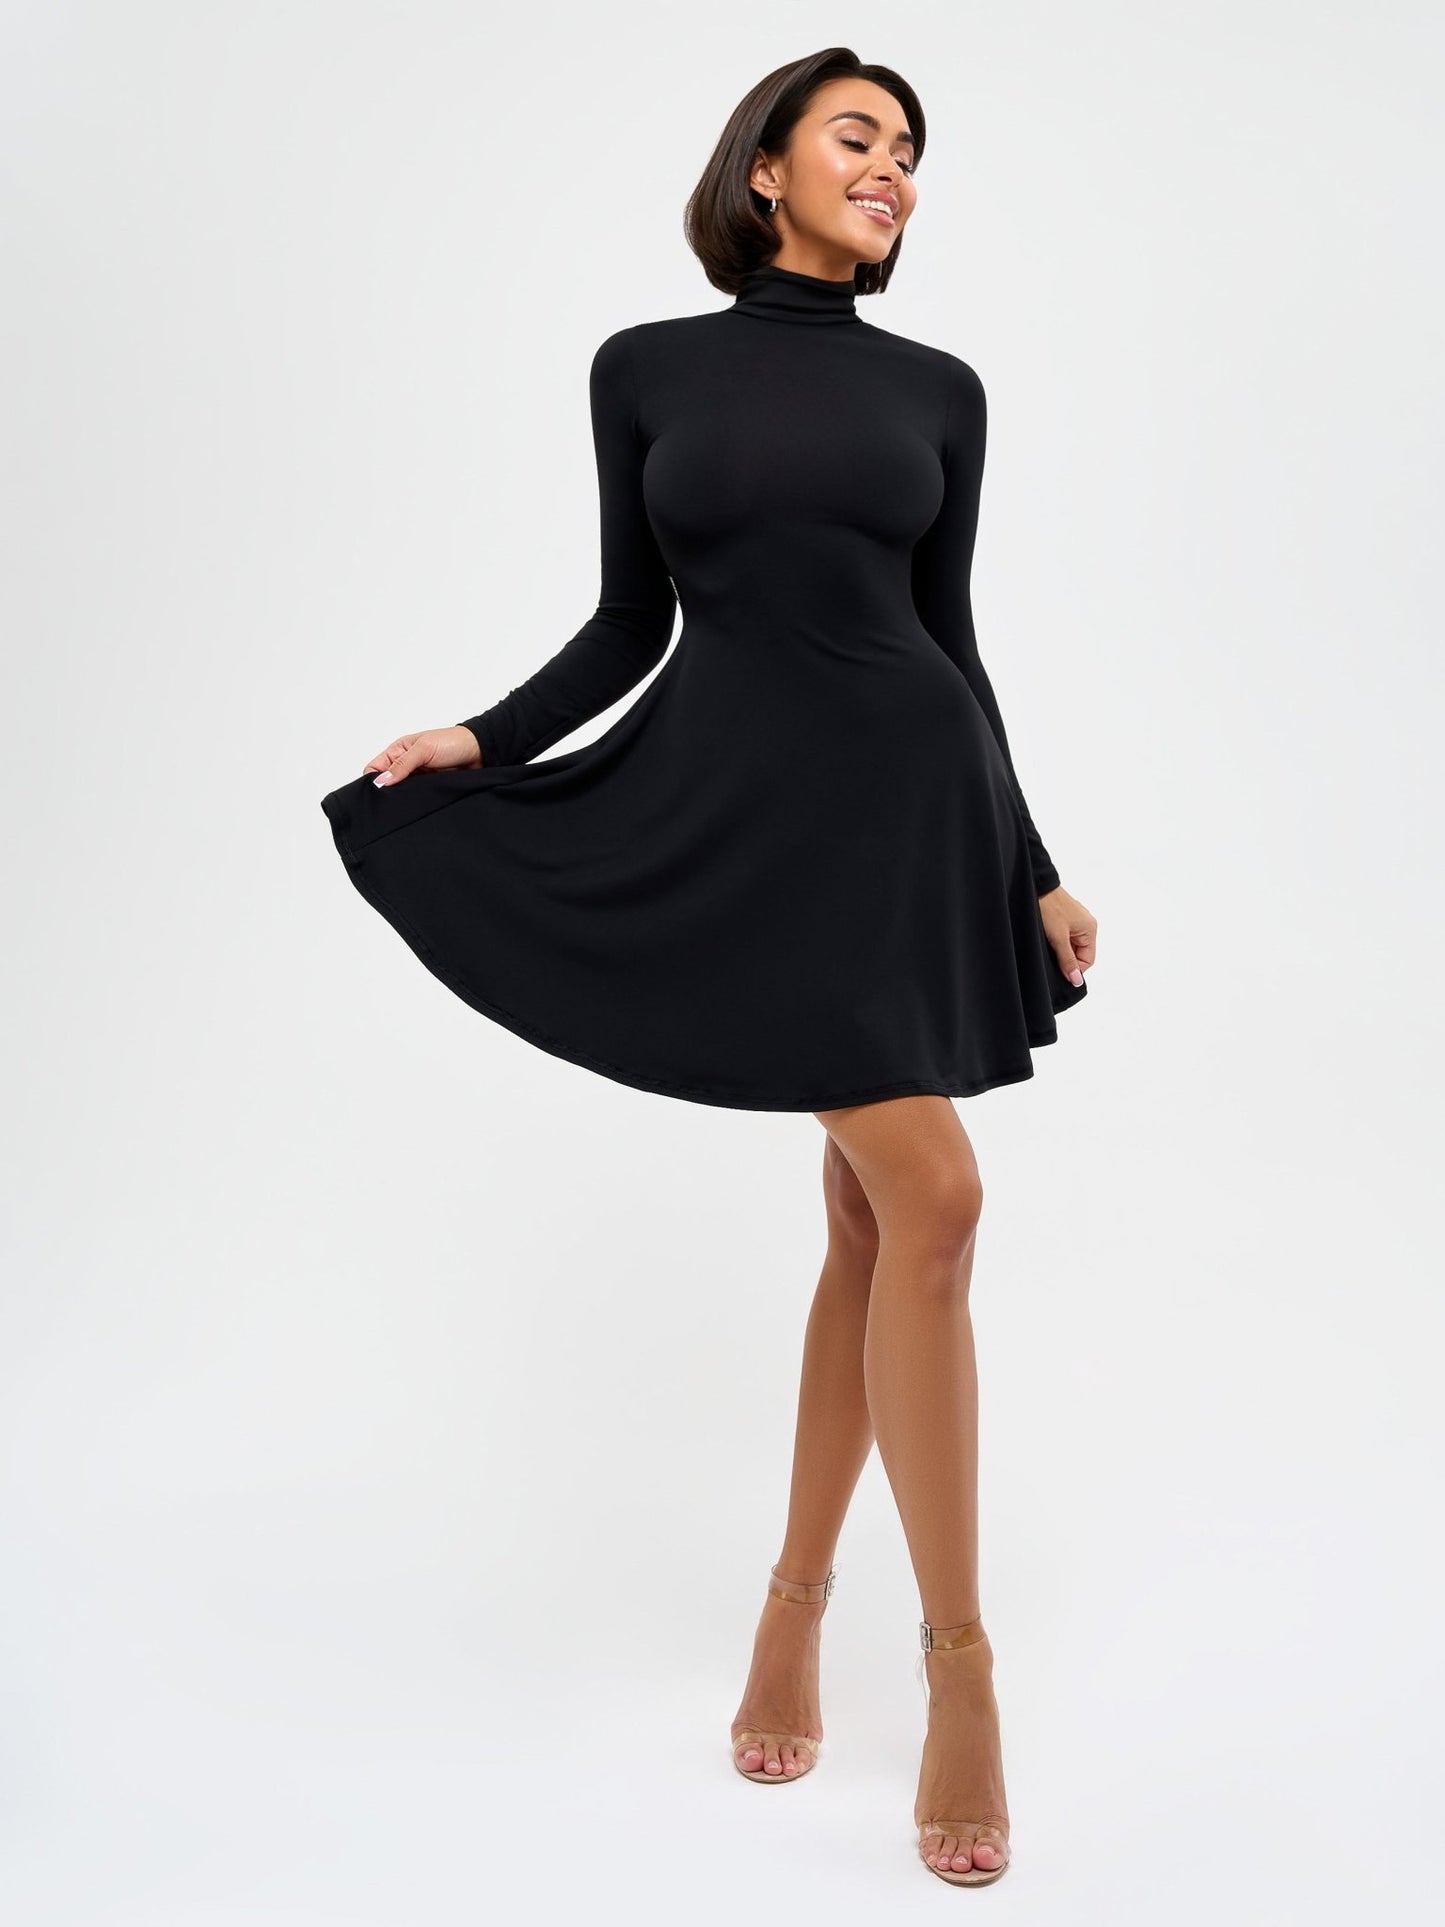 Sunny Dress Black - Bona Fide